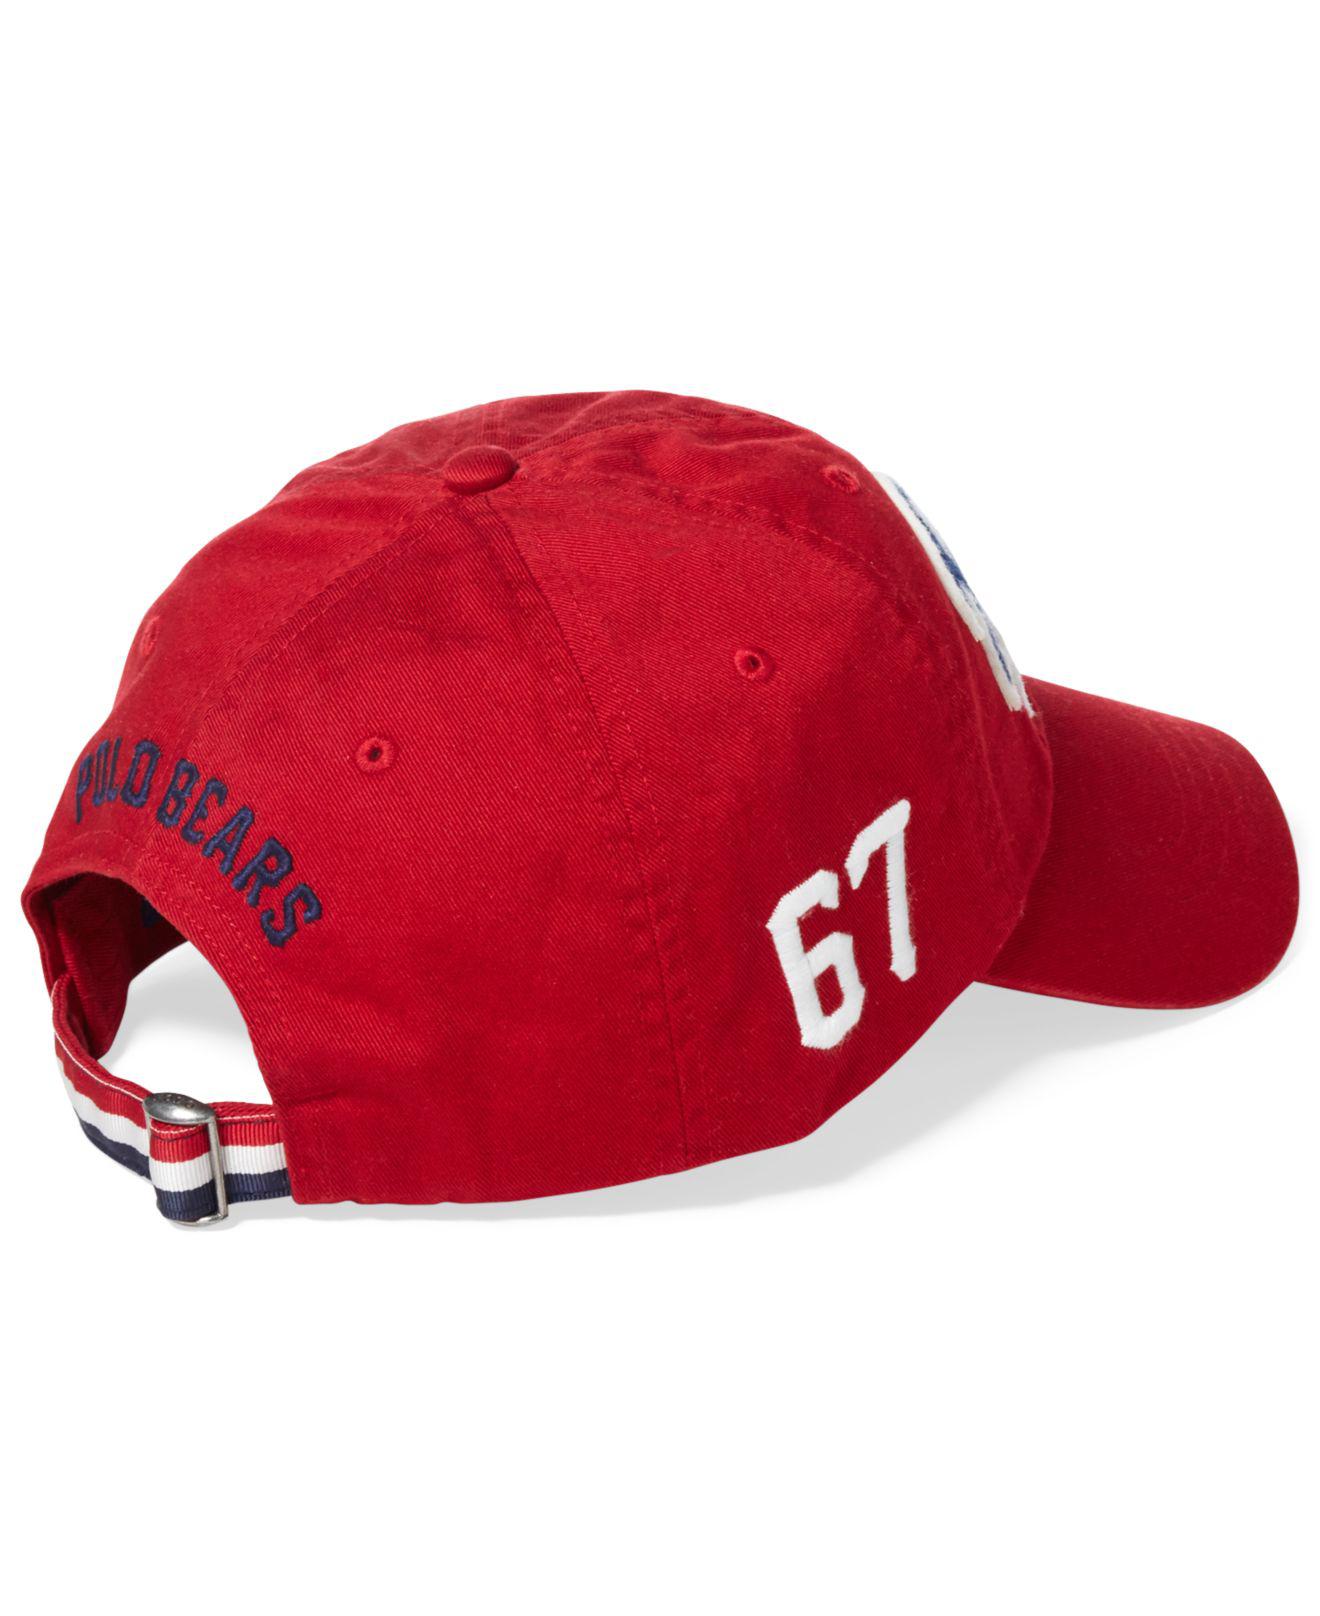 Polo Ralph Lauren Polo Bear Cotton Baseball Cap in Red for Men - Lyst